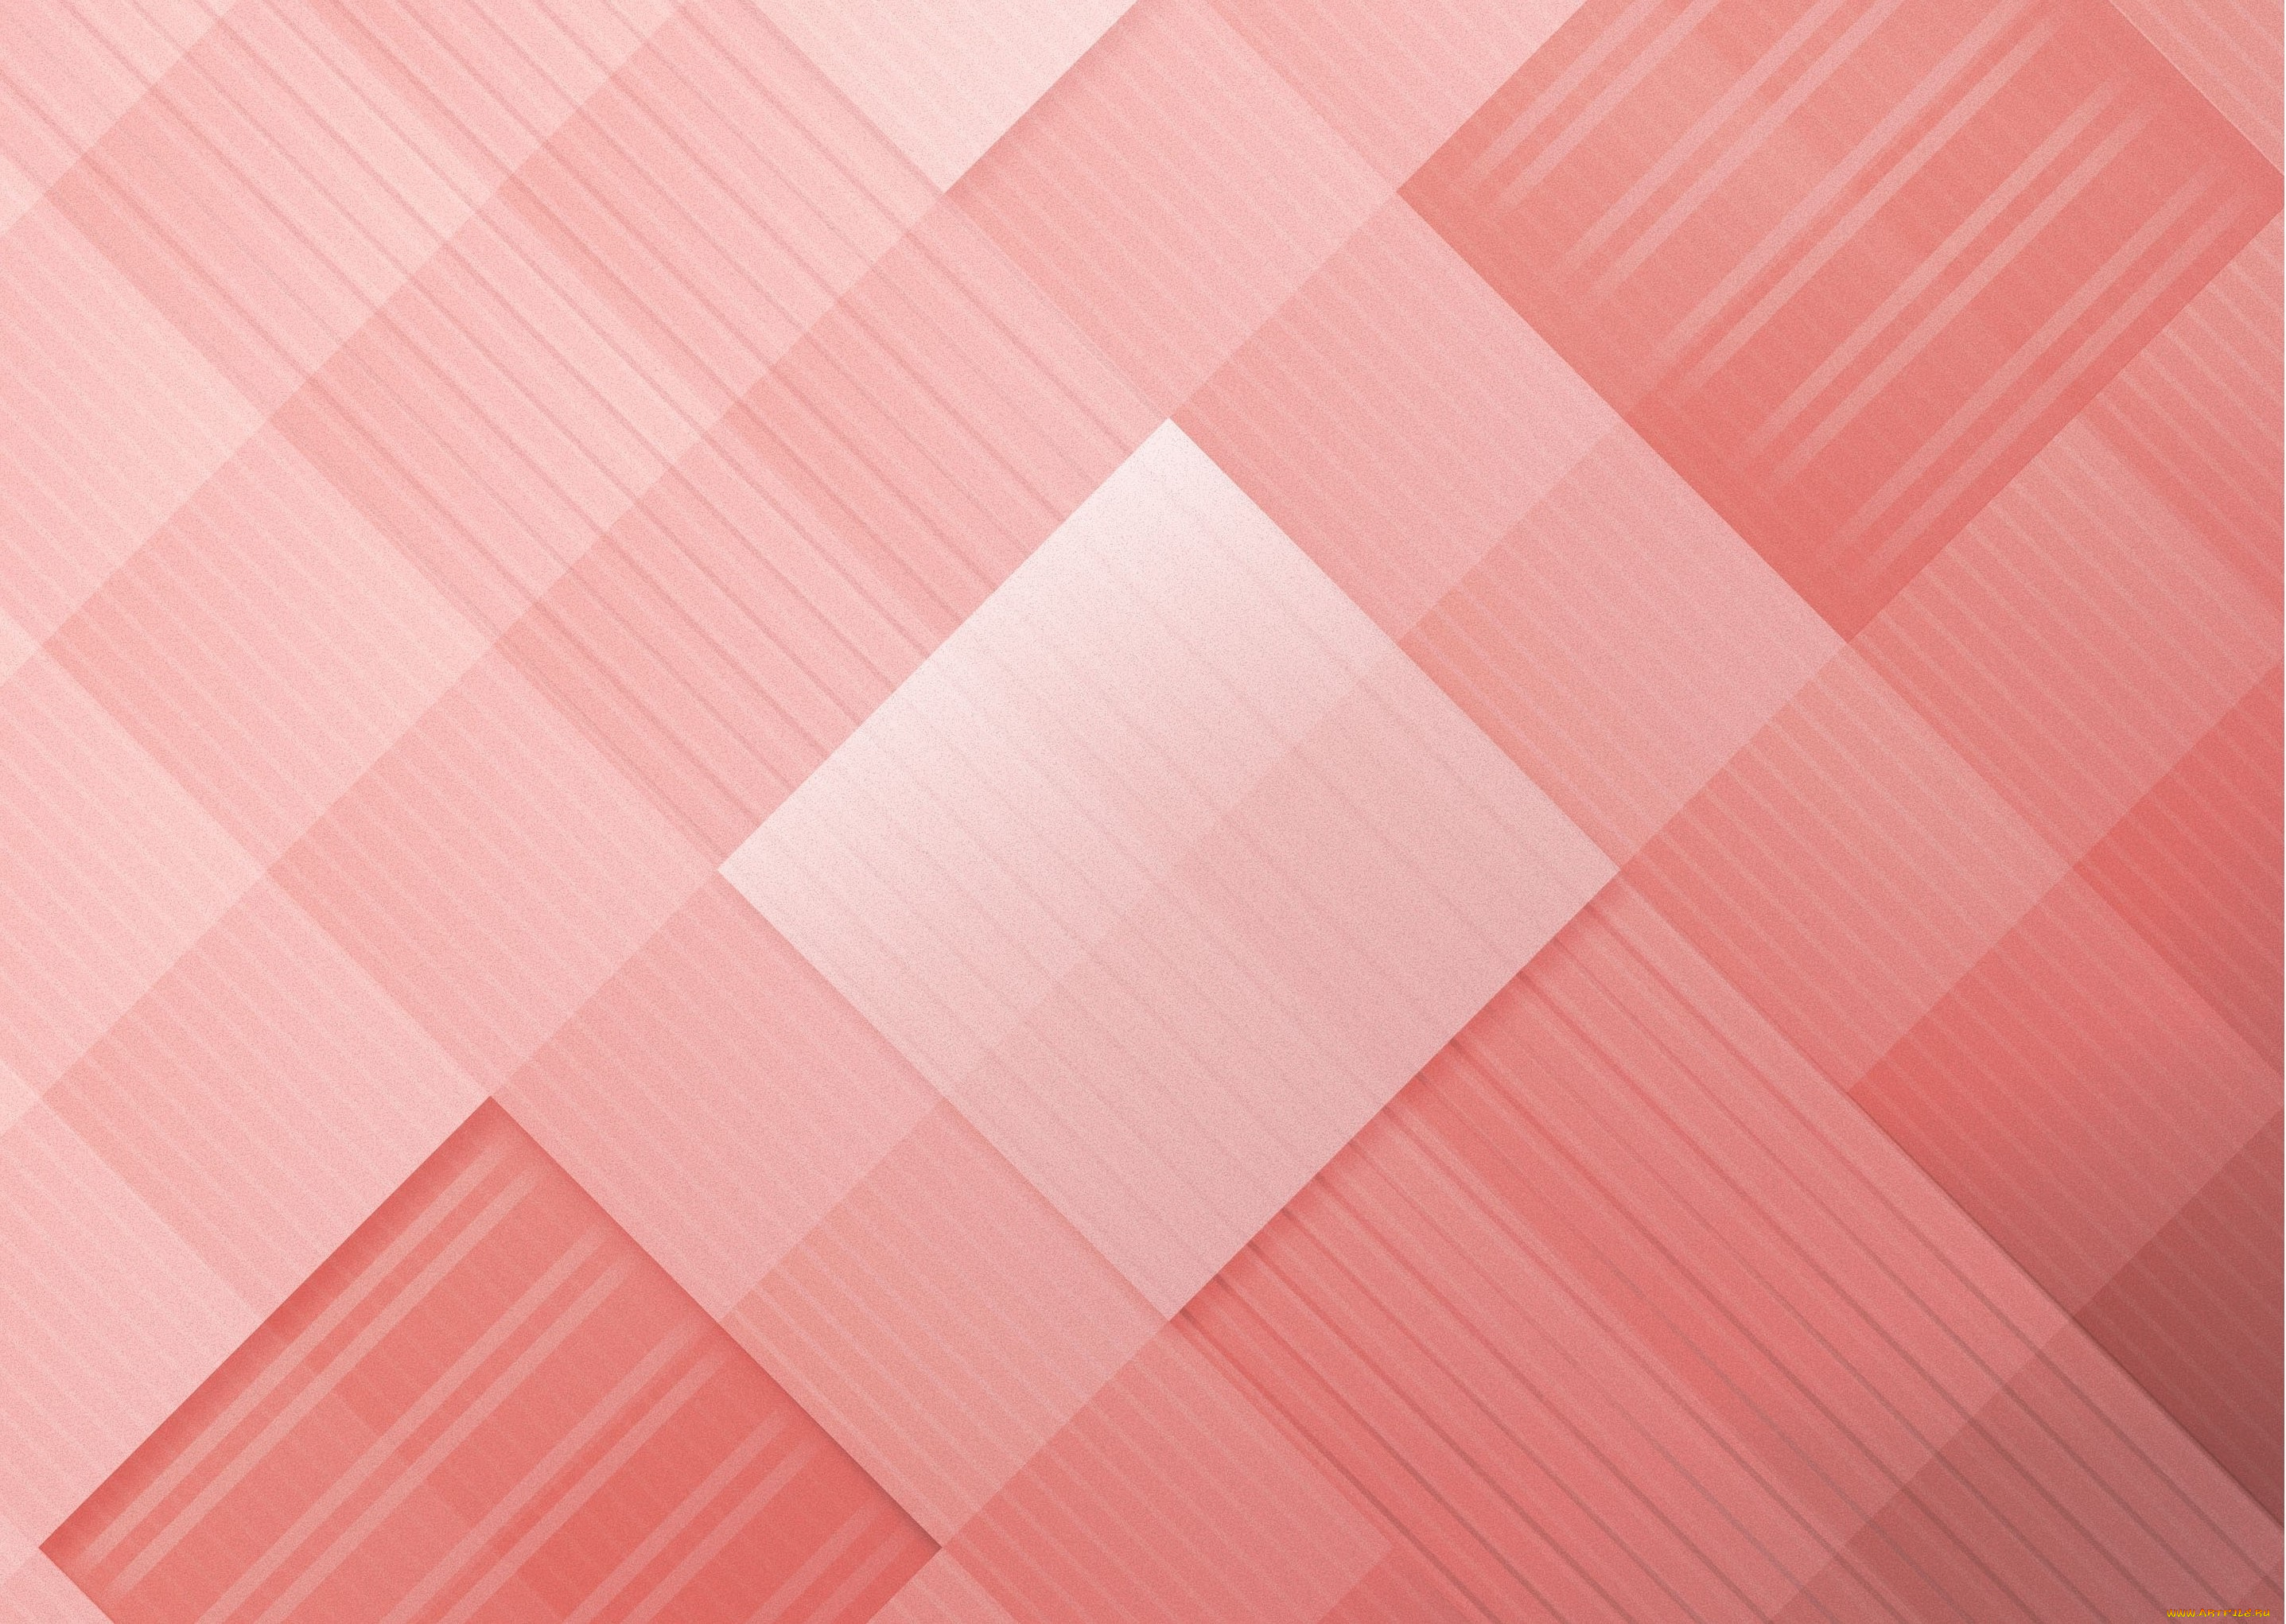 Плитка розовый цвет. Розовая плитка квадратиками. Розовая плитка квадратная. Розовая плитка текстура. Розовая плитка квадрат.